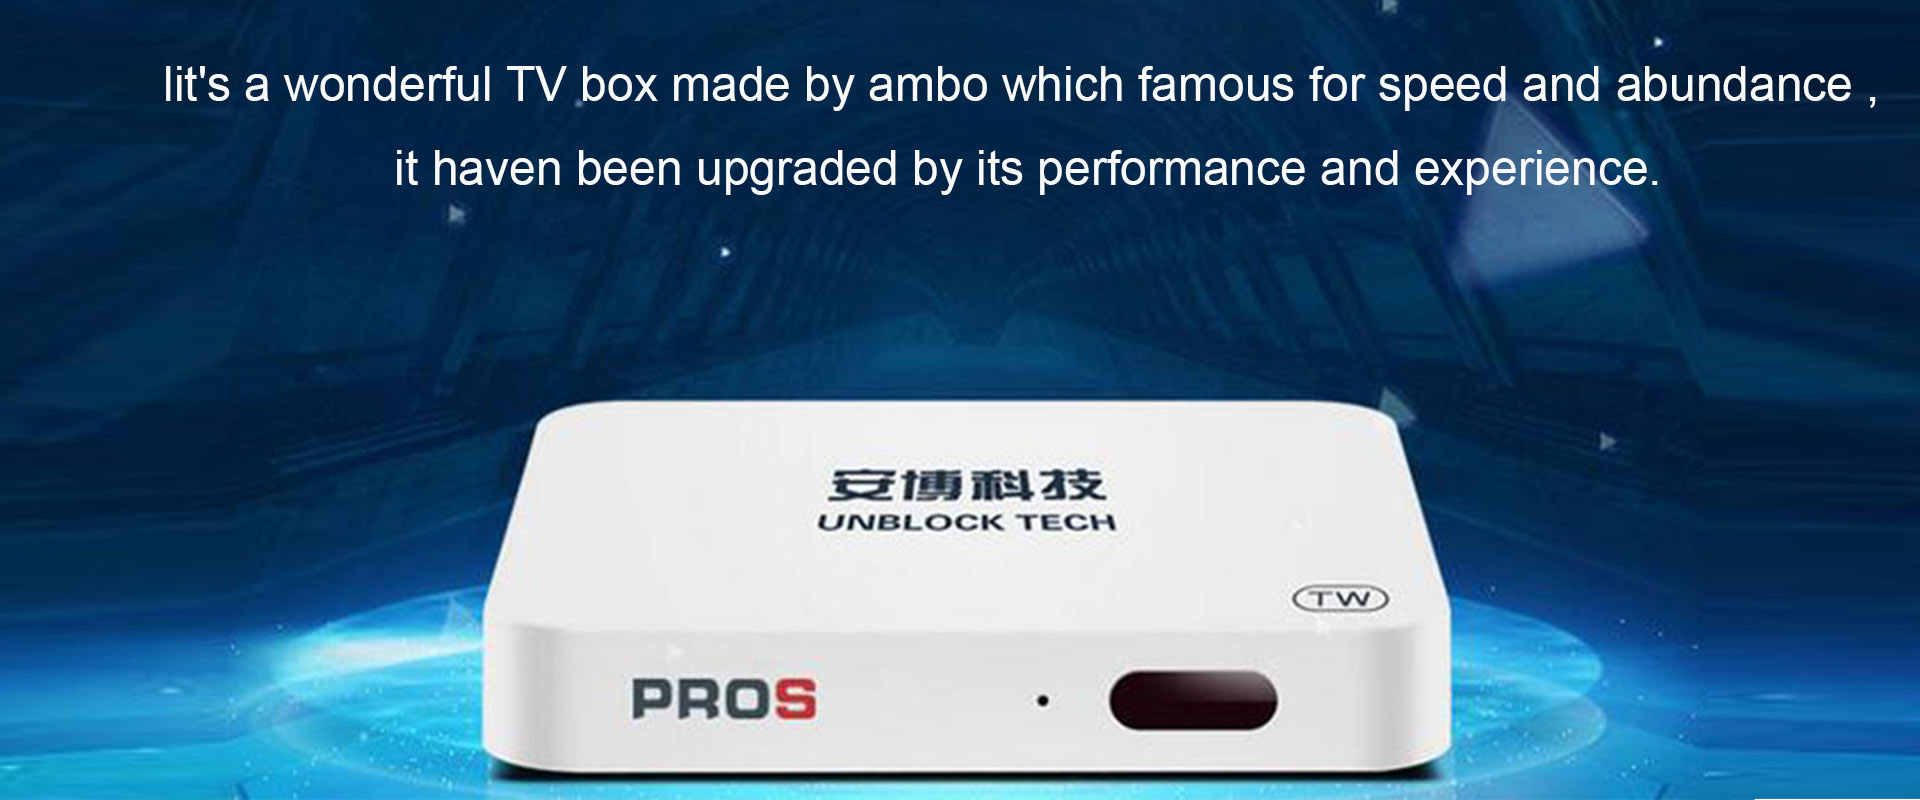 UBOX 7 TV Box - Unblock UPROS UBOX Gen 7 Android TV Box 4K